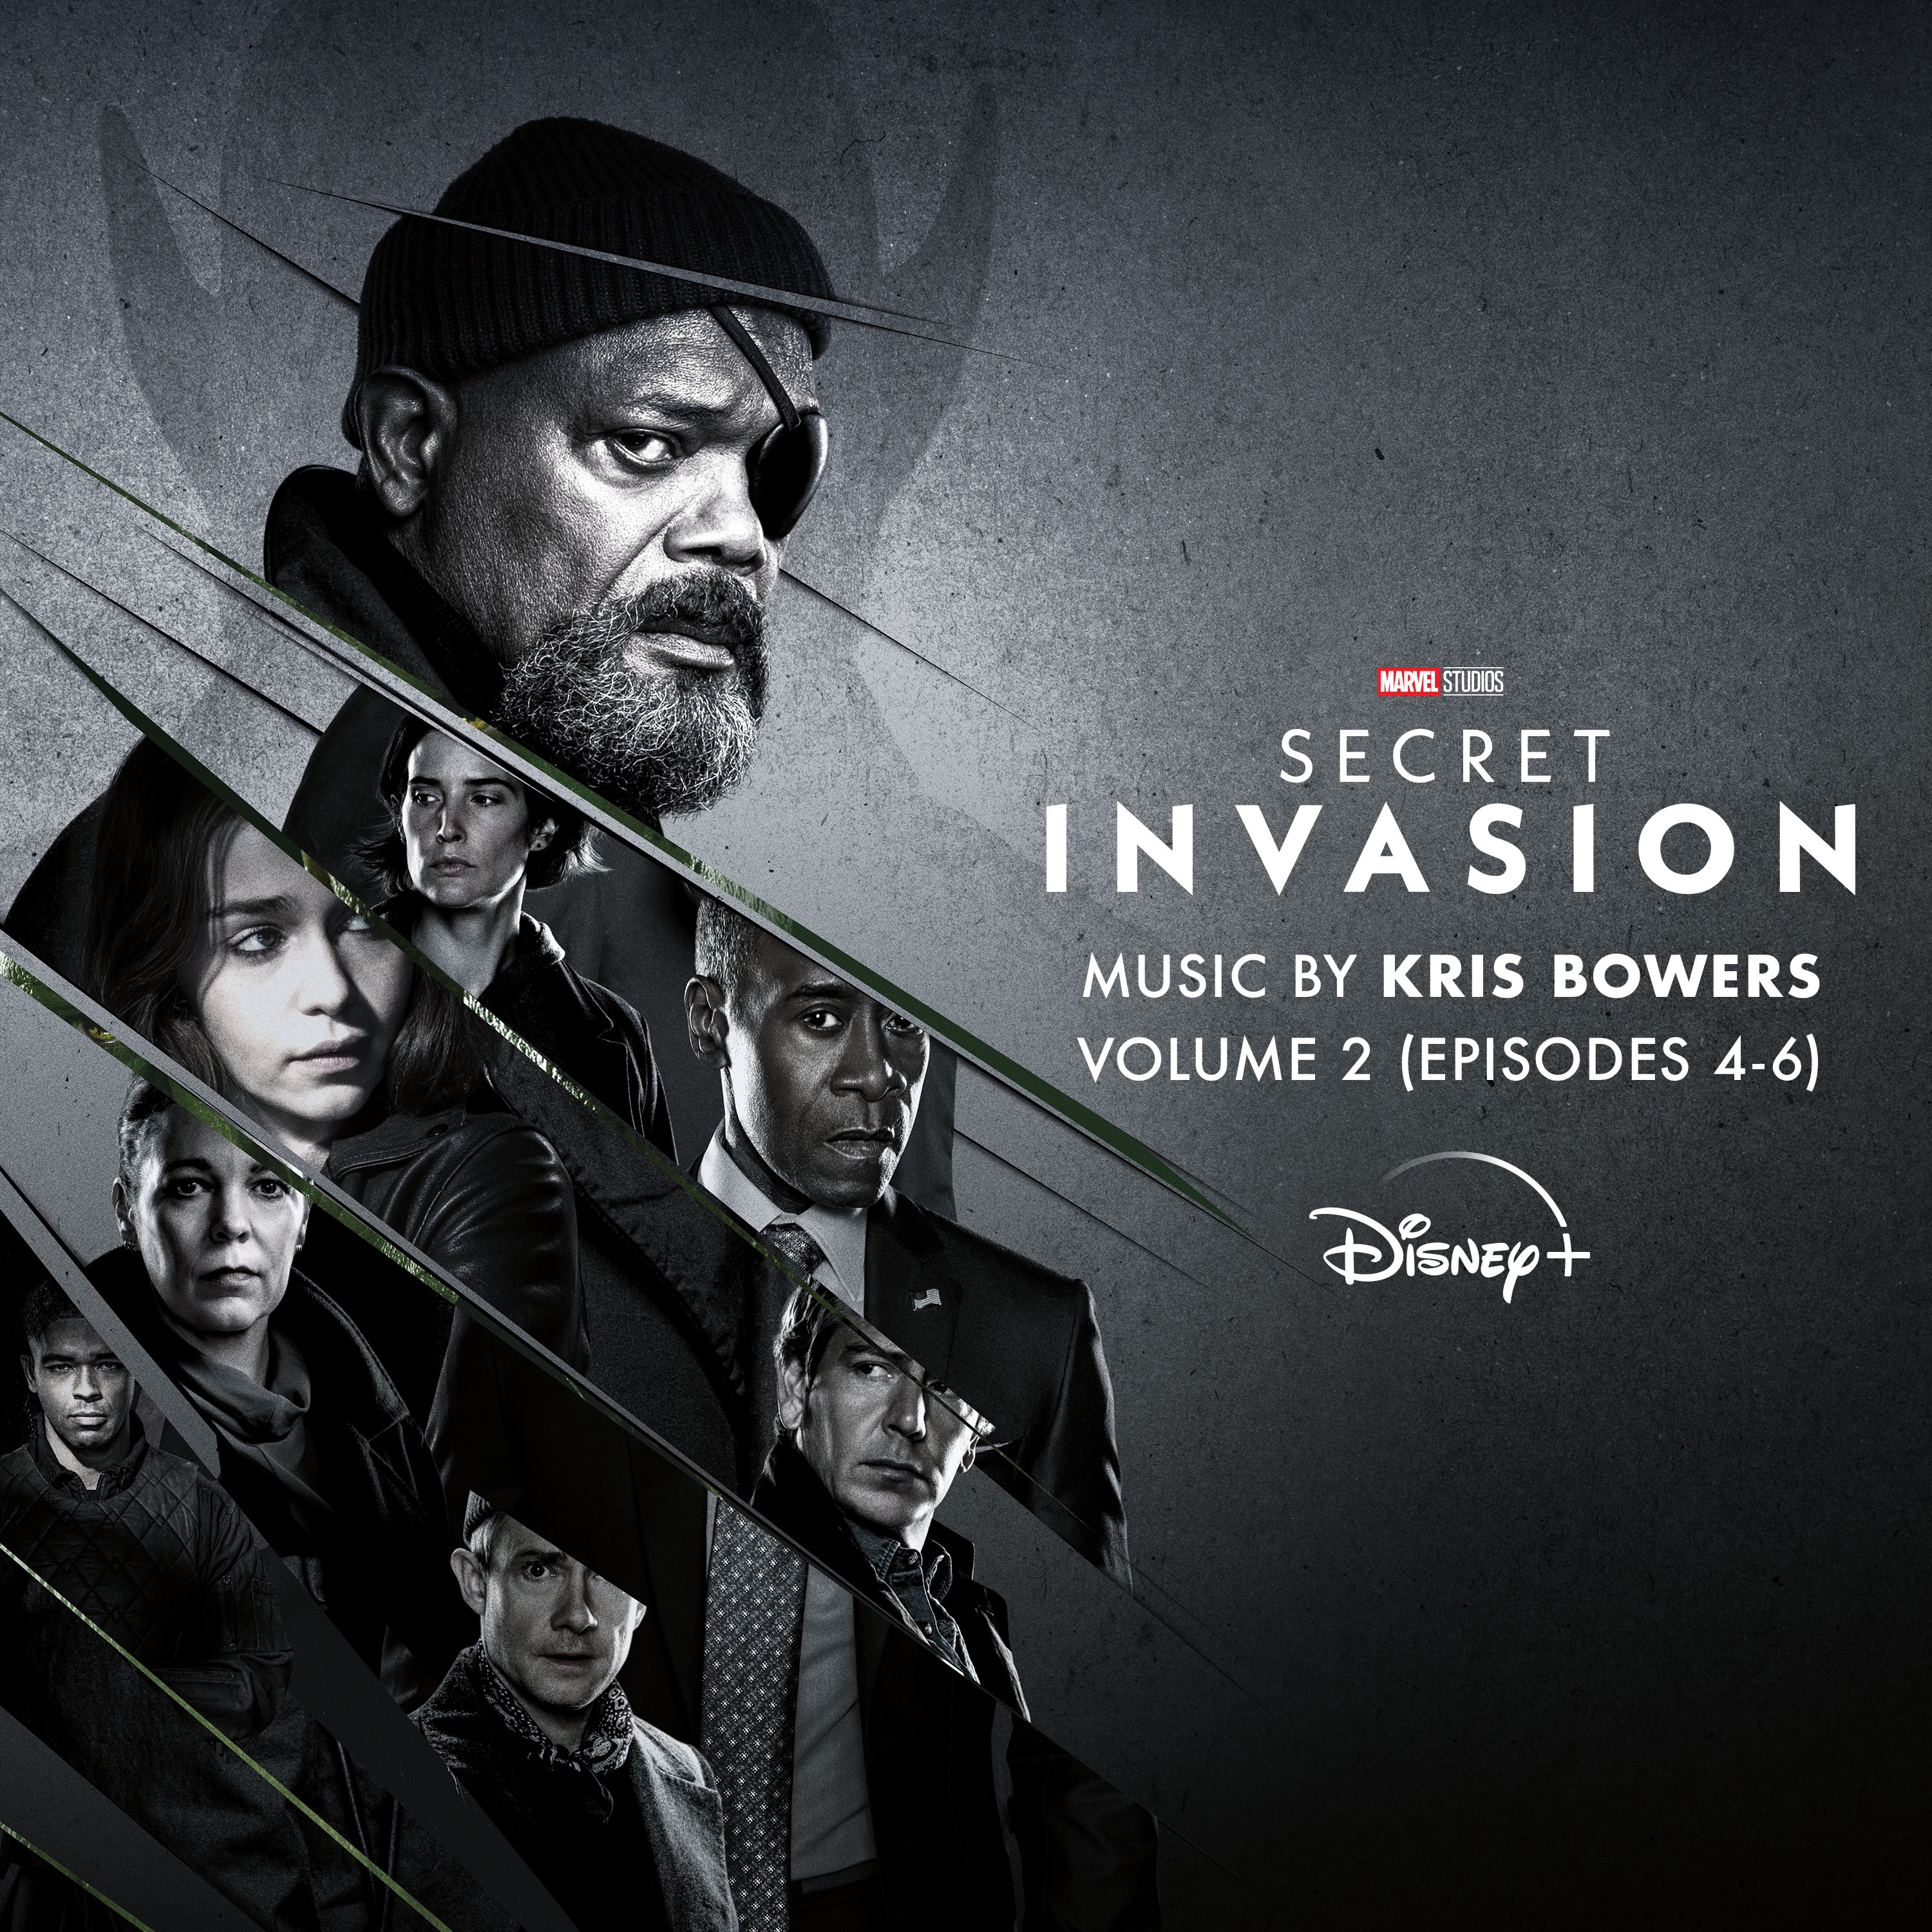 Secret Invasion Theme - Nick Fury  EPIC VERSION (Main Title Music - Opening  Soundtrack) 